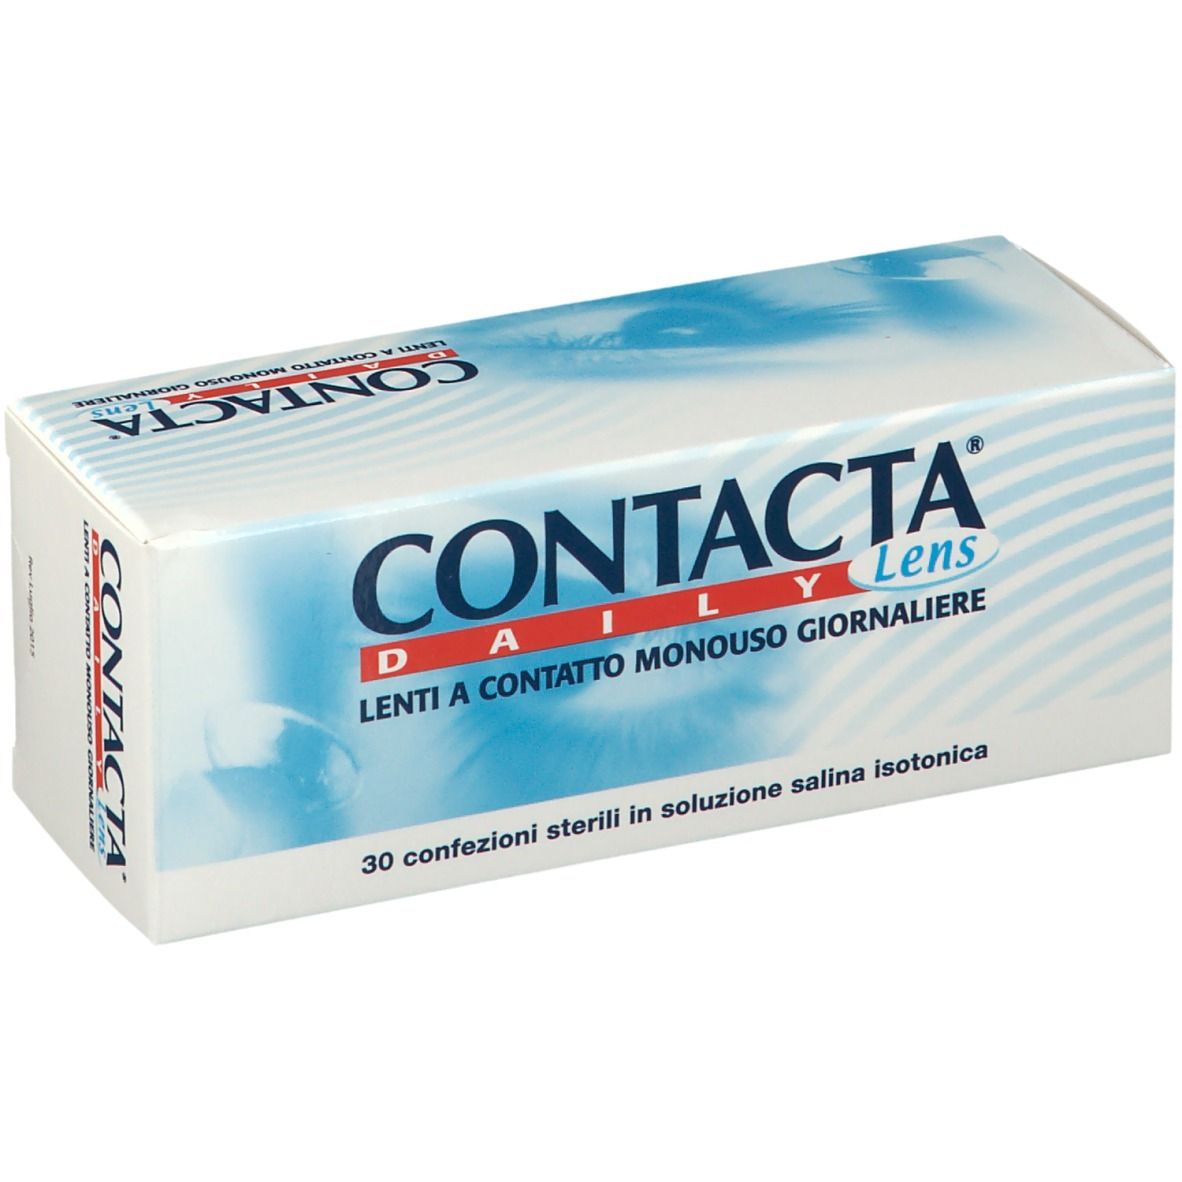 CONTACTA® Daily Lens  Tipo -7.50